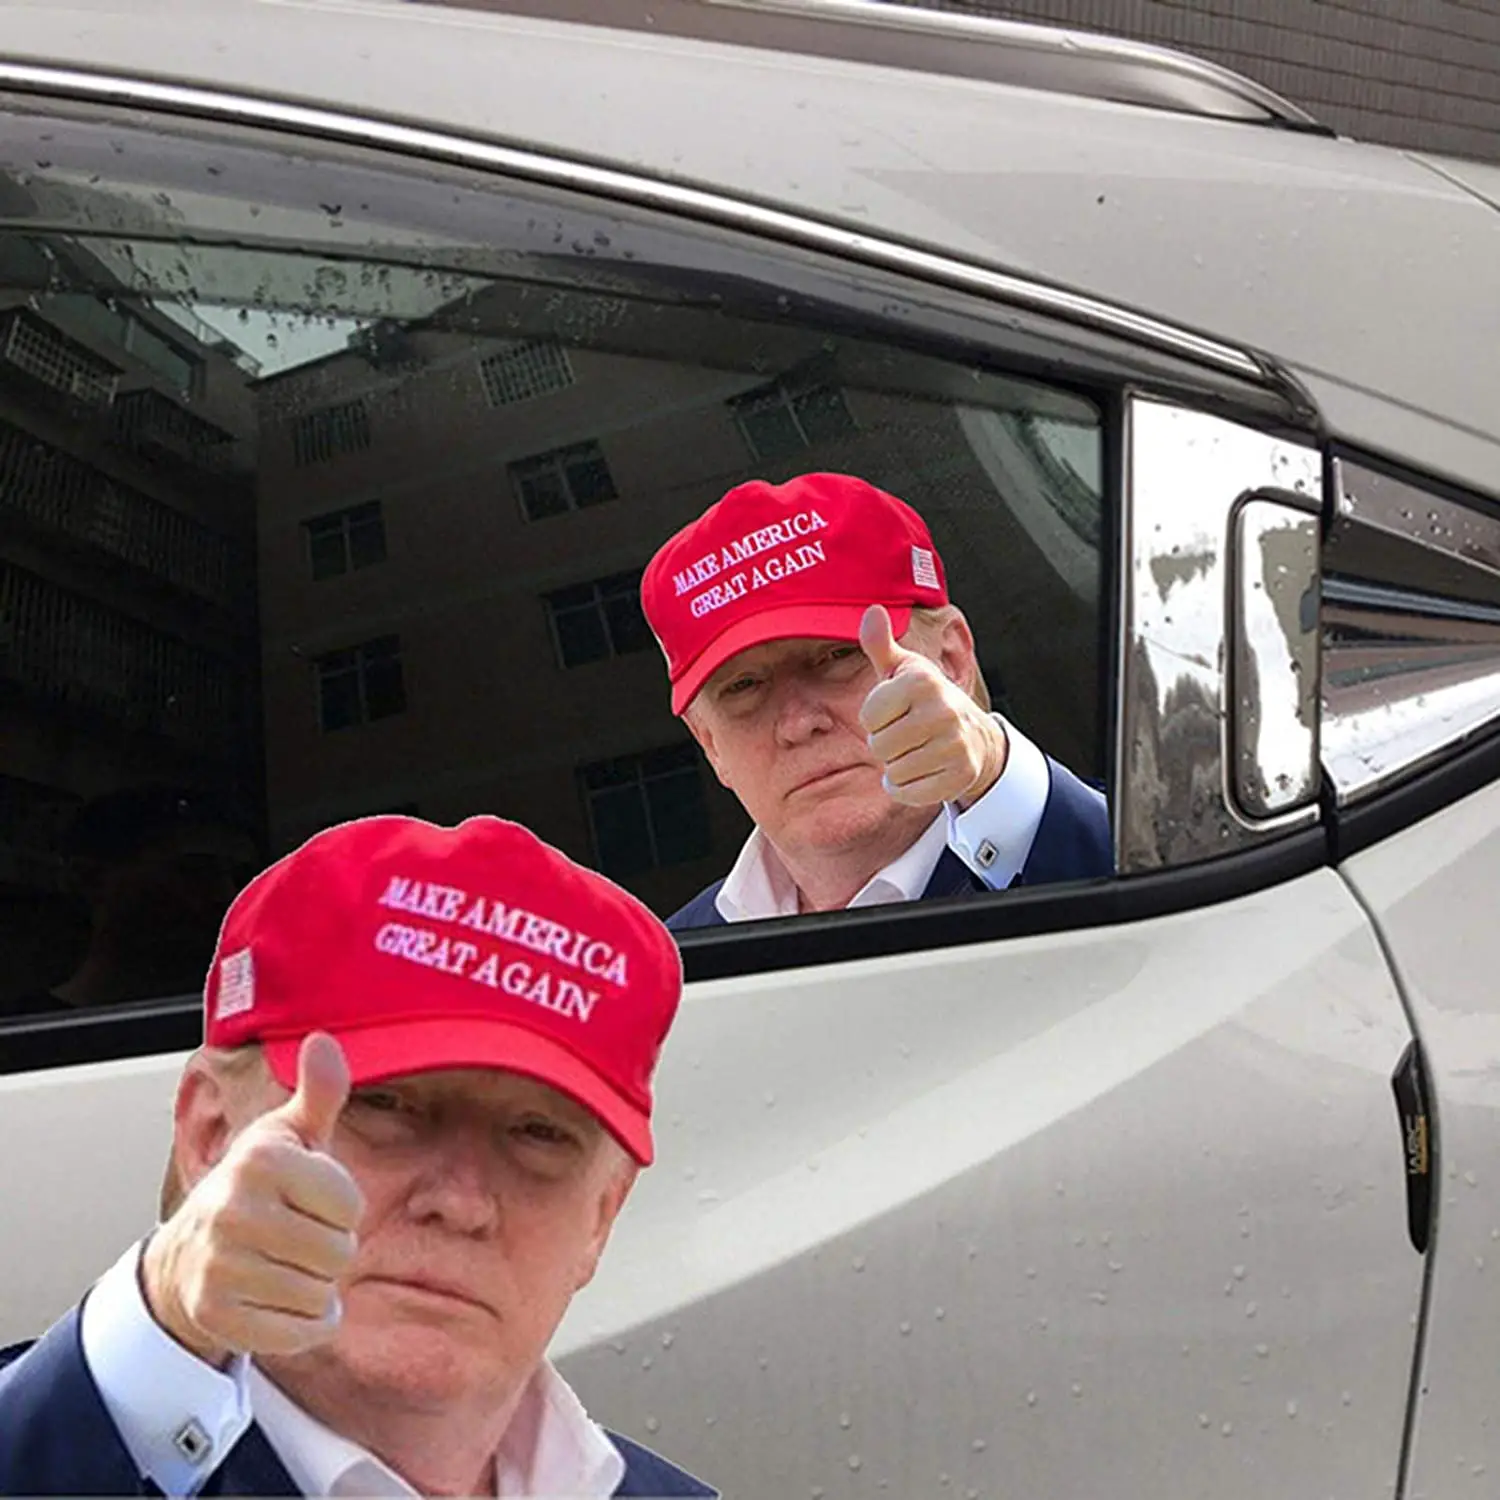 Amazon.com: Pleasay Trump Car Window Stickers Donald Trump Car Sticker ...